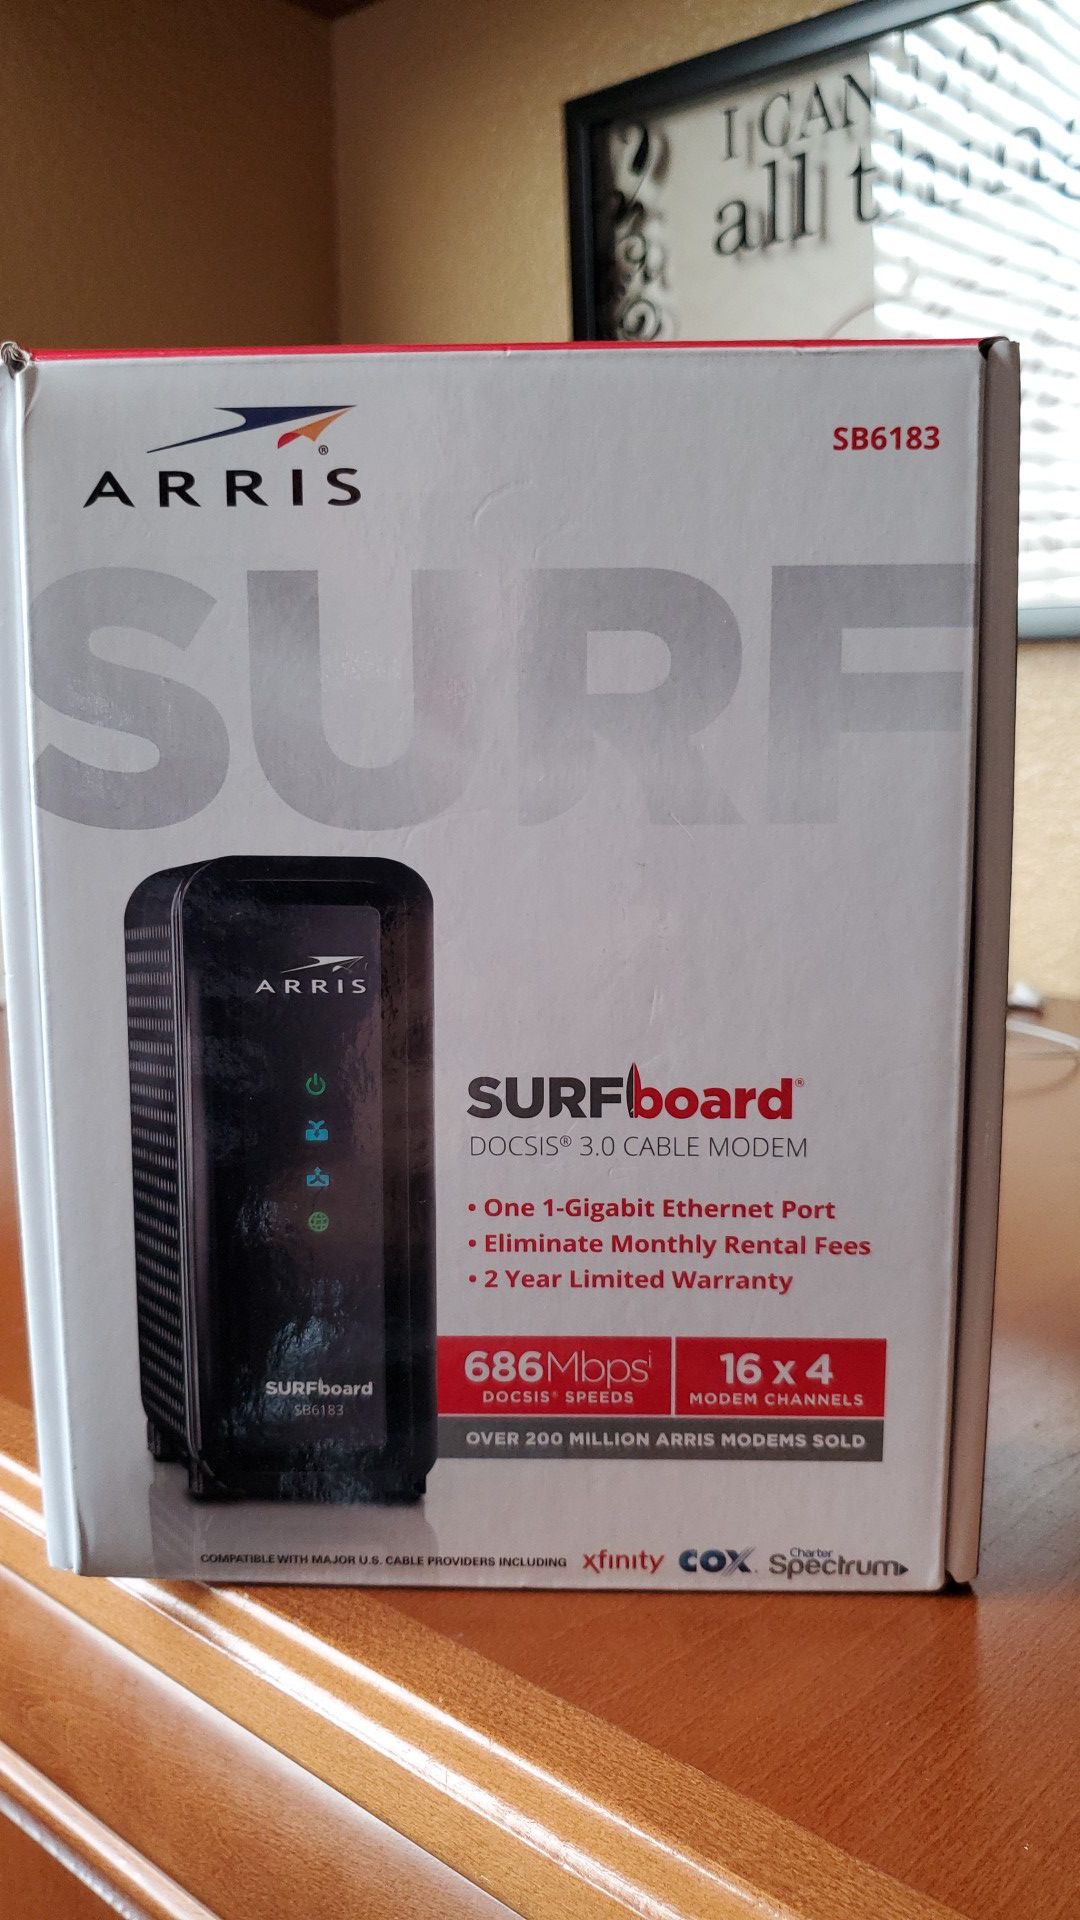 Arris SurfBoard cable modem